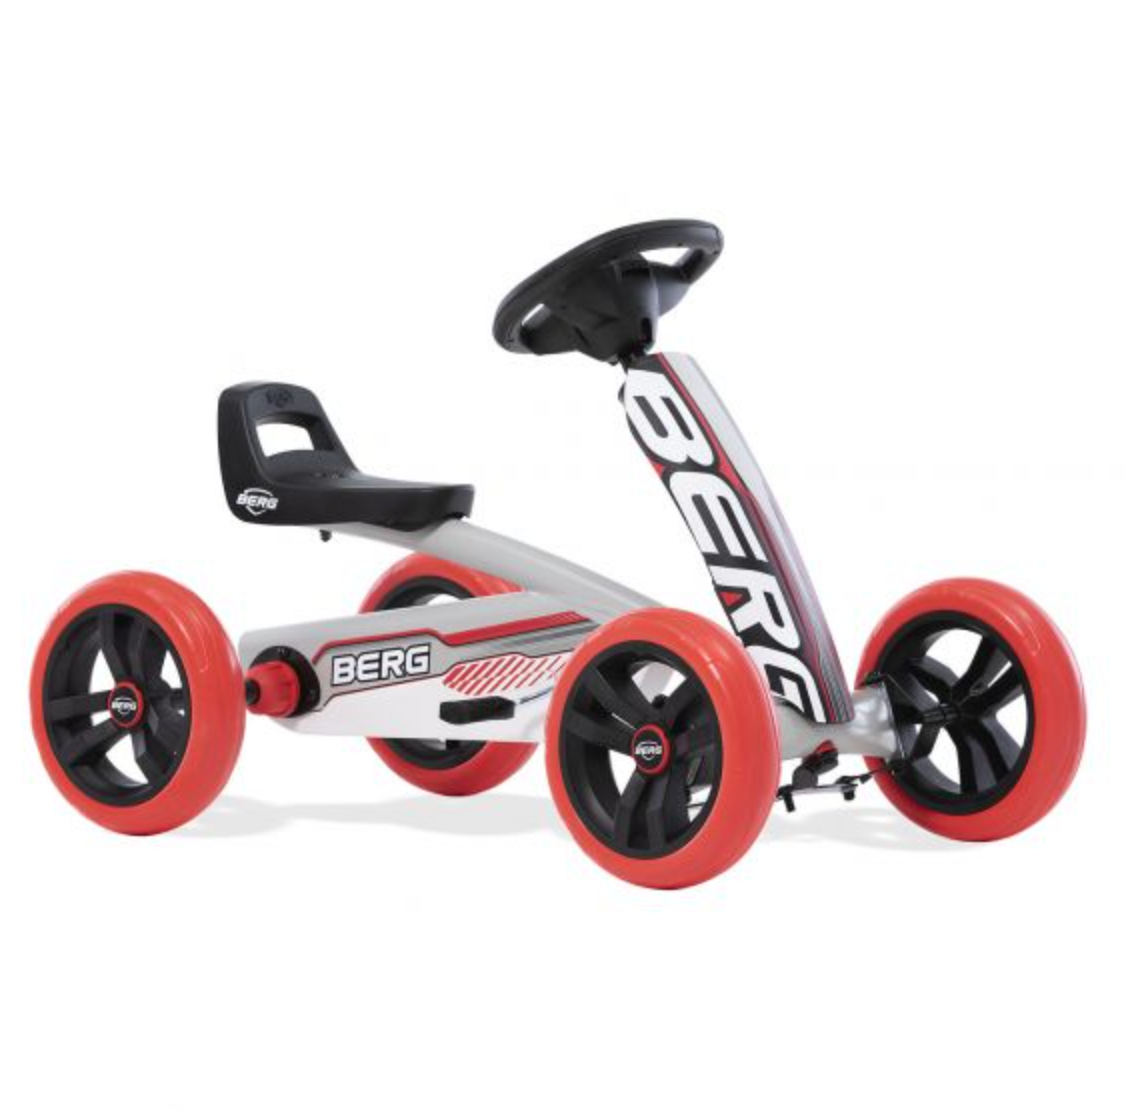 BERG Buzzy Beatz Pedal Kart - WePlayAlot